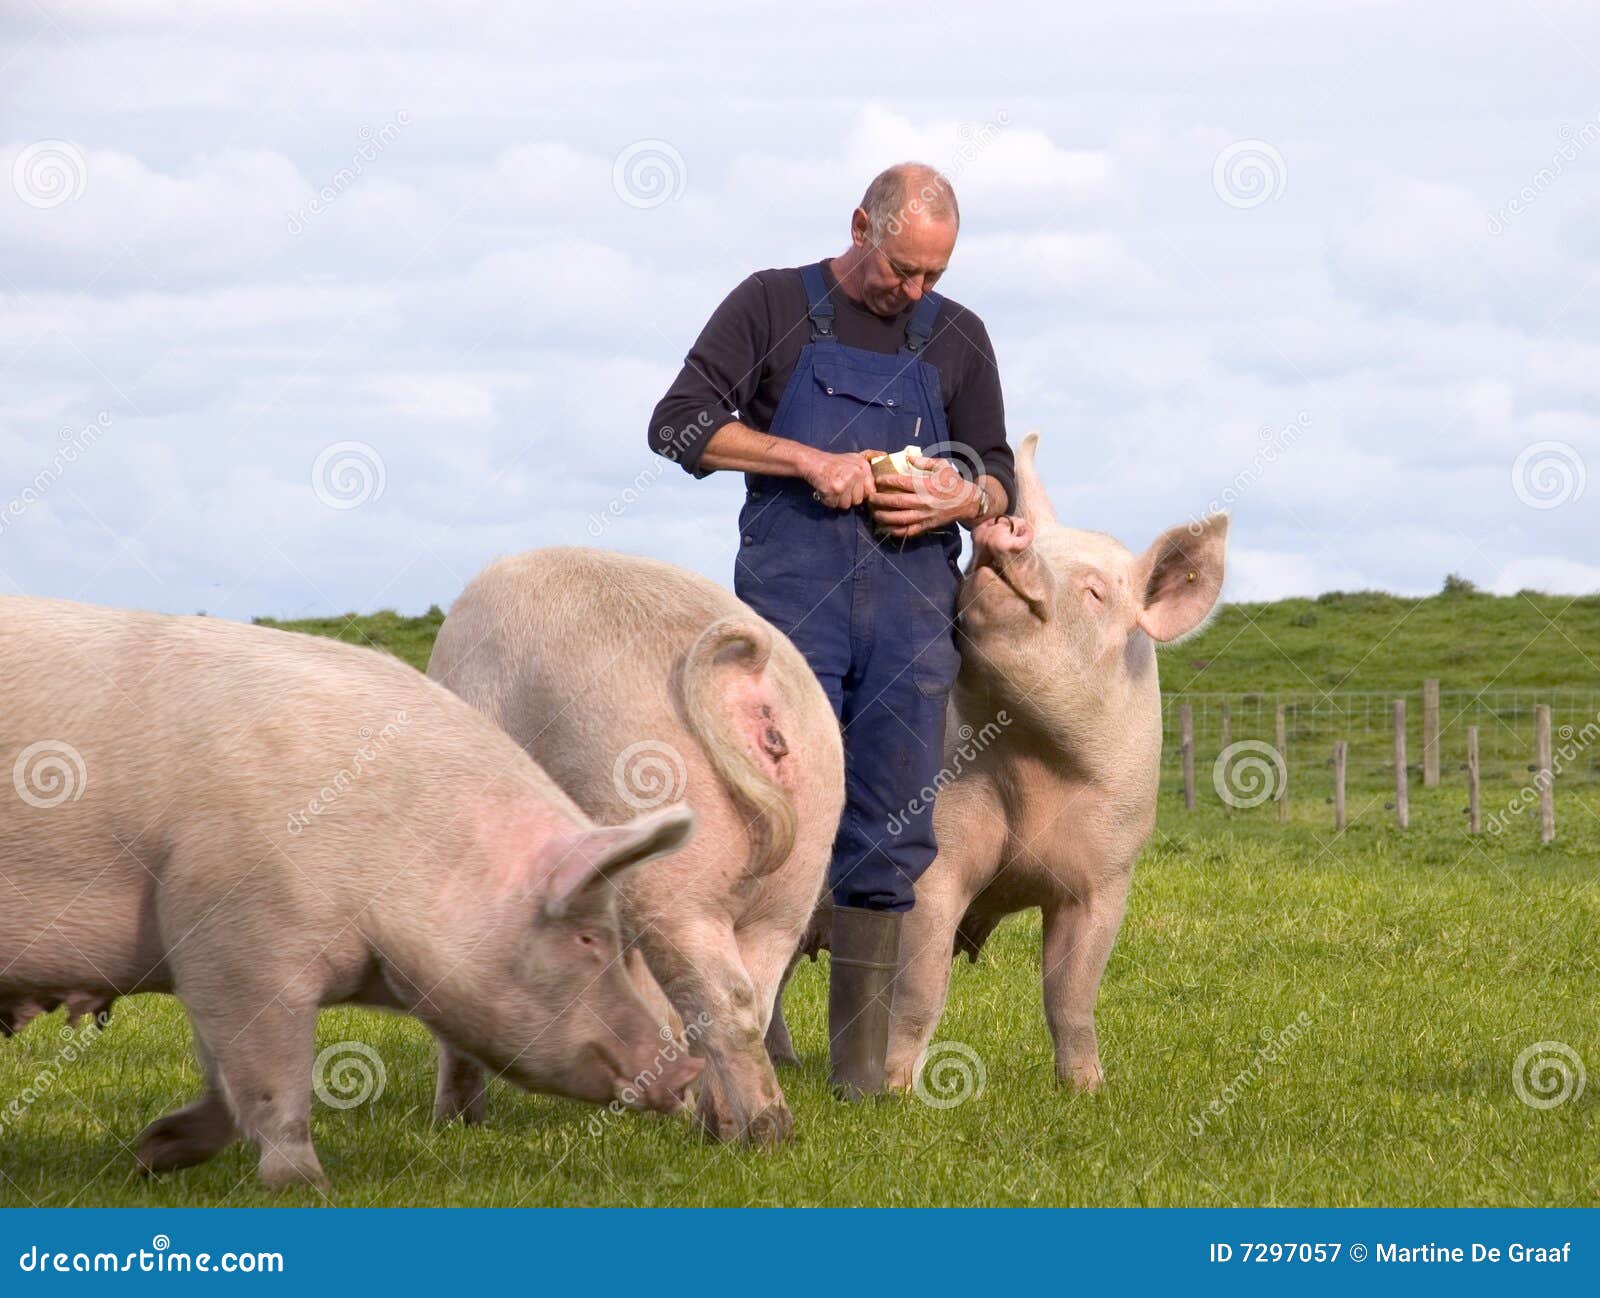 pigs farmer